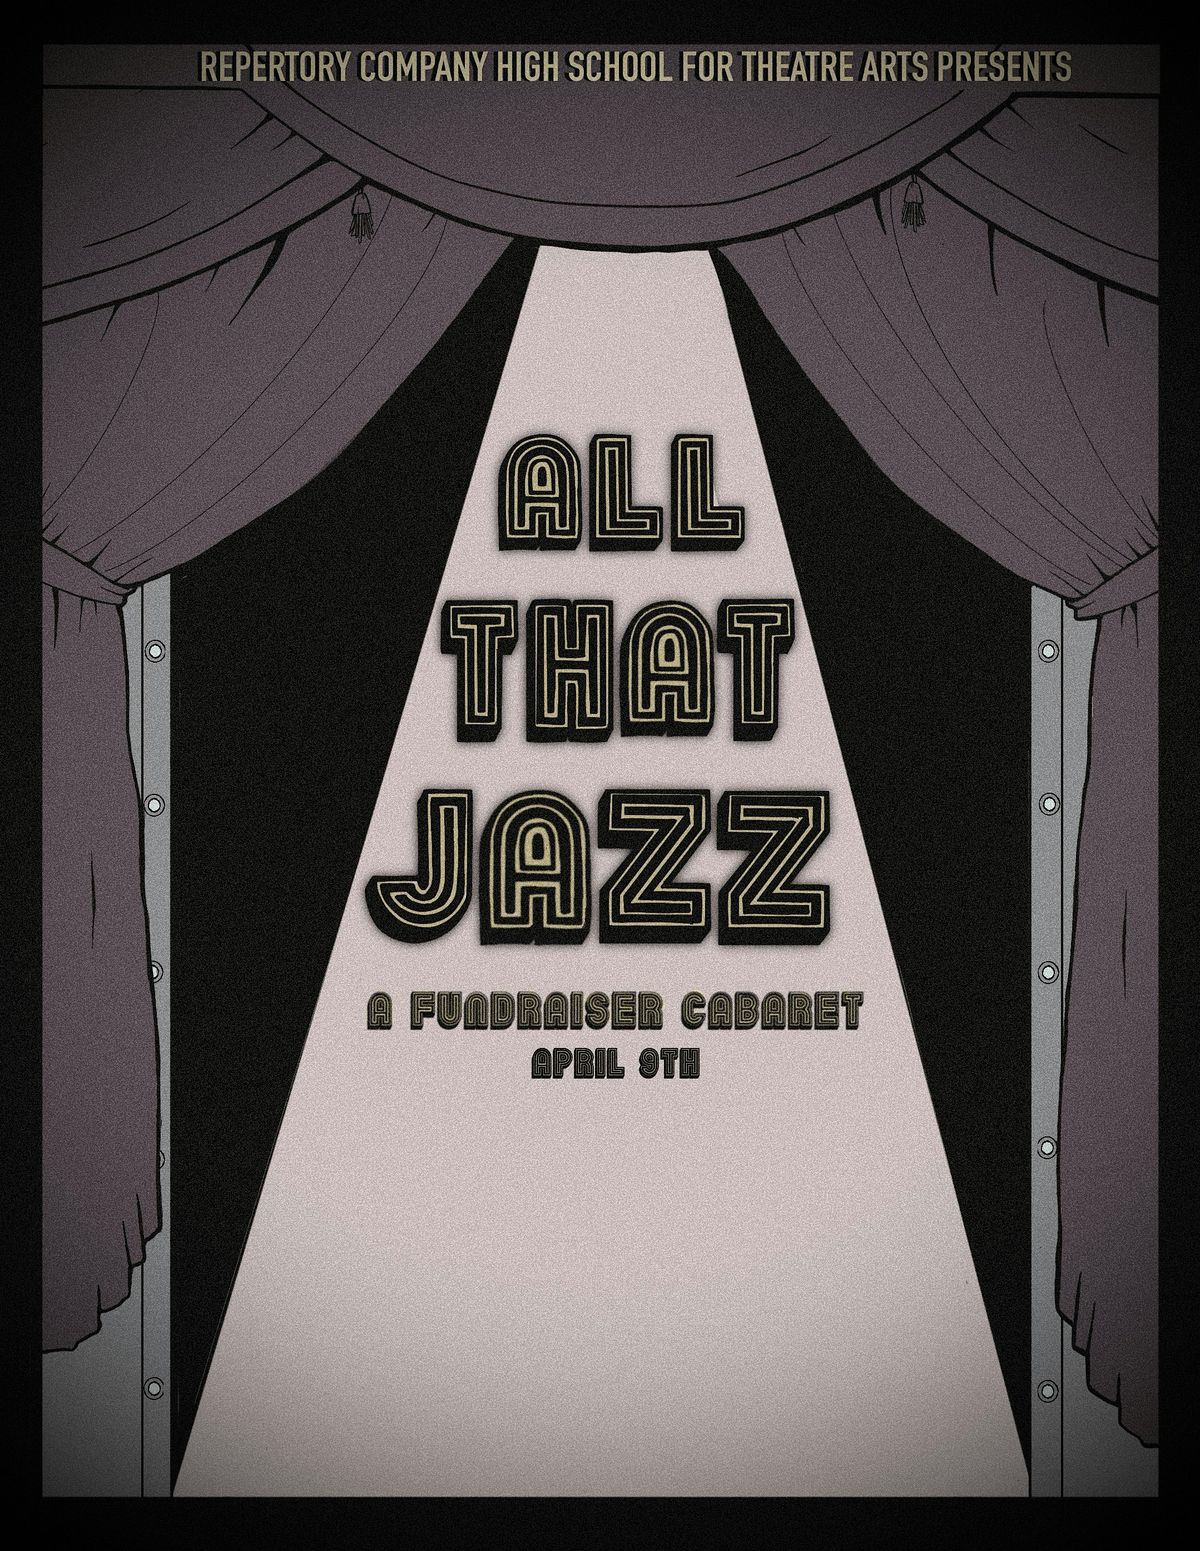 All That Jazz: A Fundraiser Cabaret